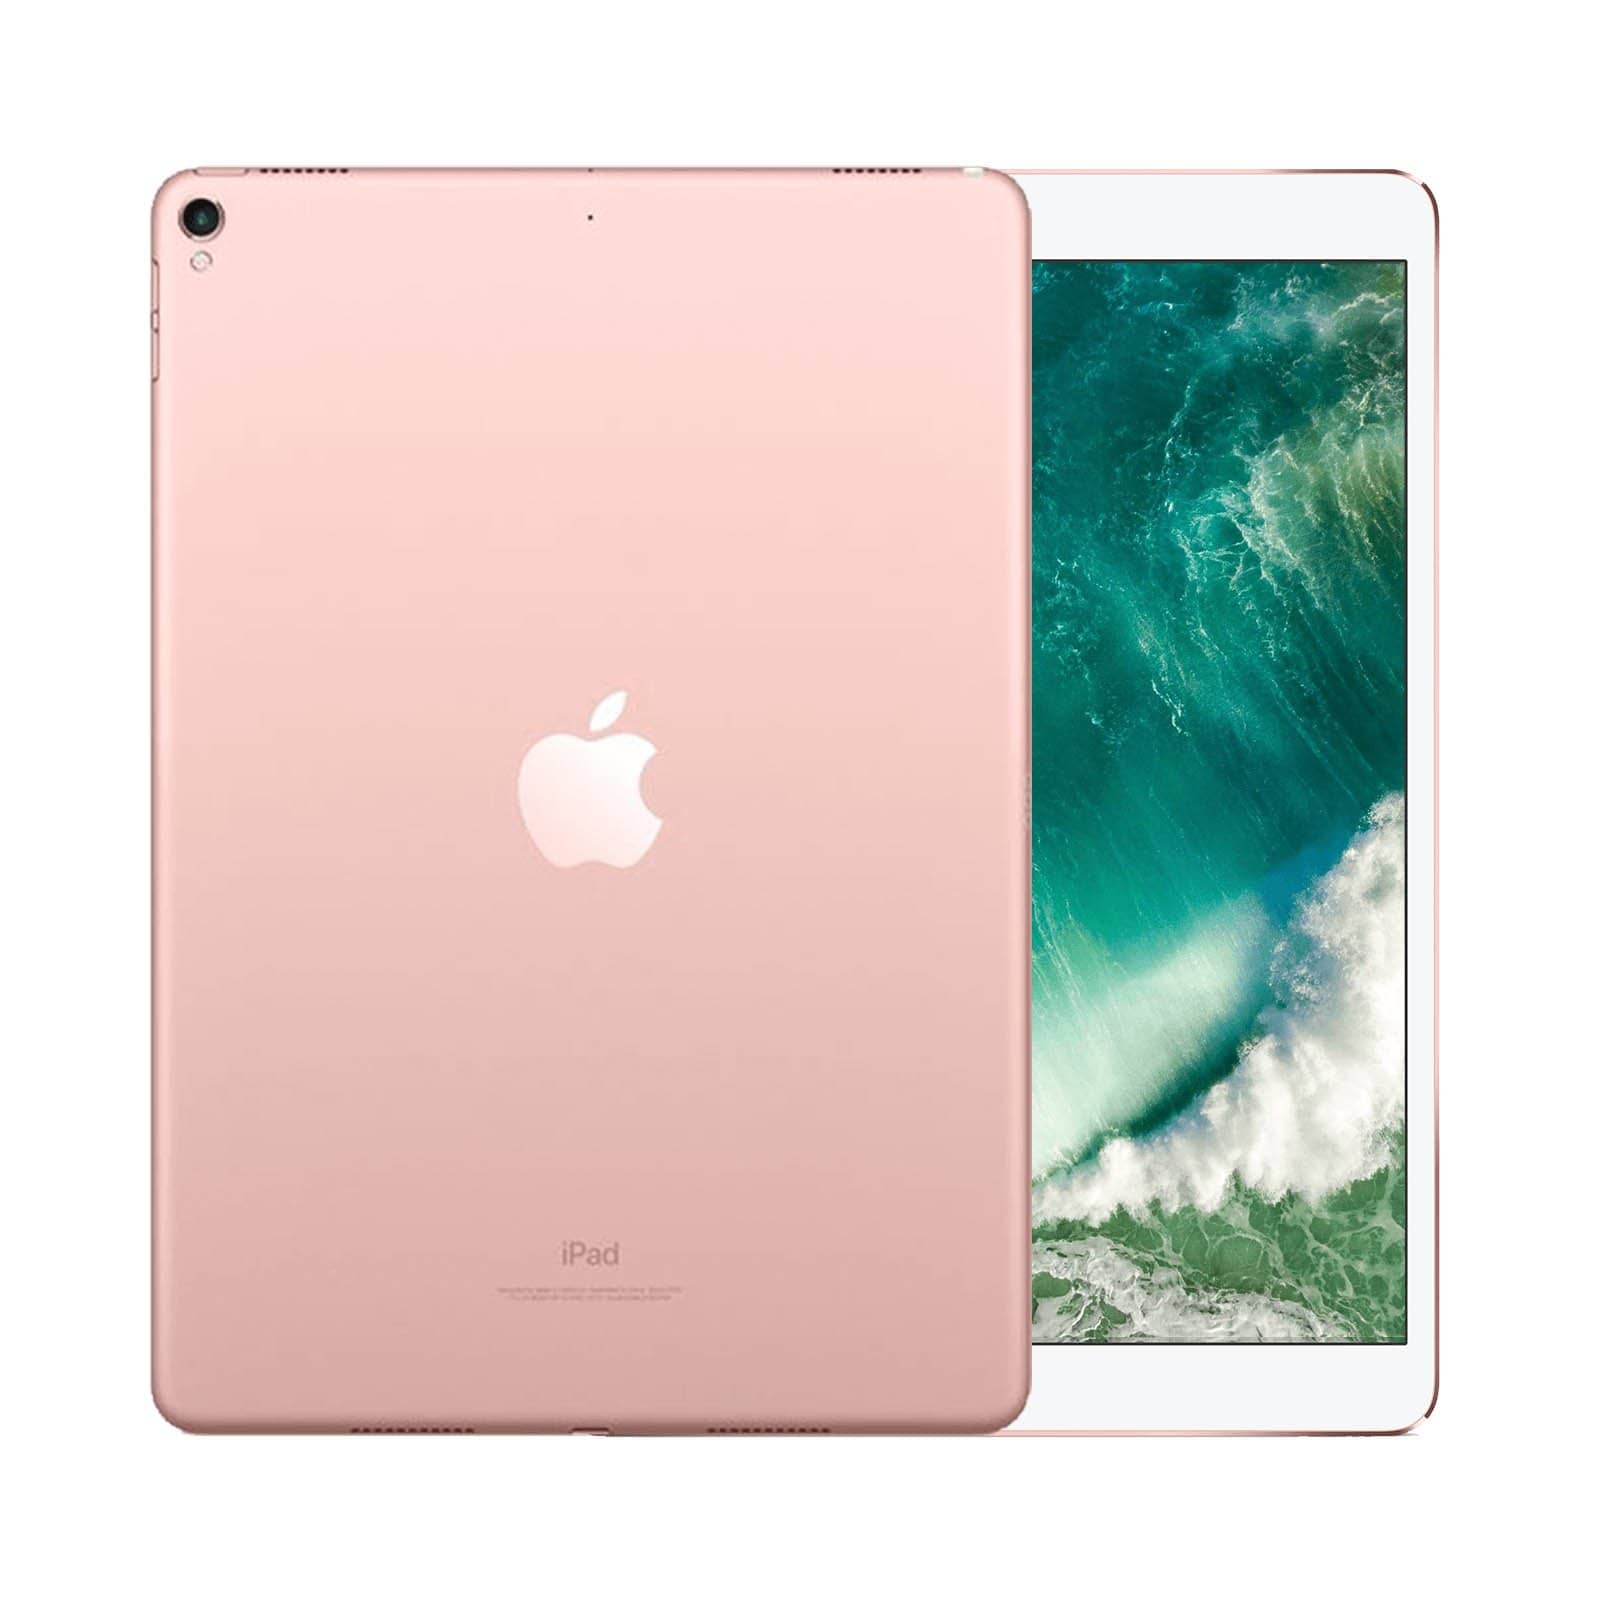 iPad Pro 10.5 Inch 64GB Rose Gold Very Good - WiFi 64GB Rose Gold Very Good